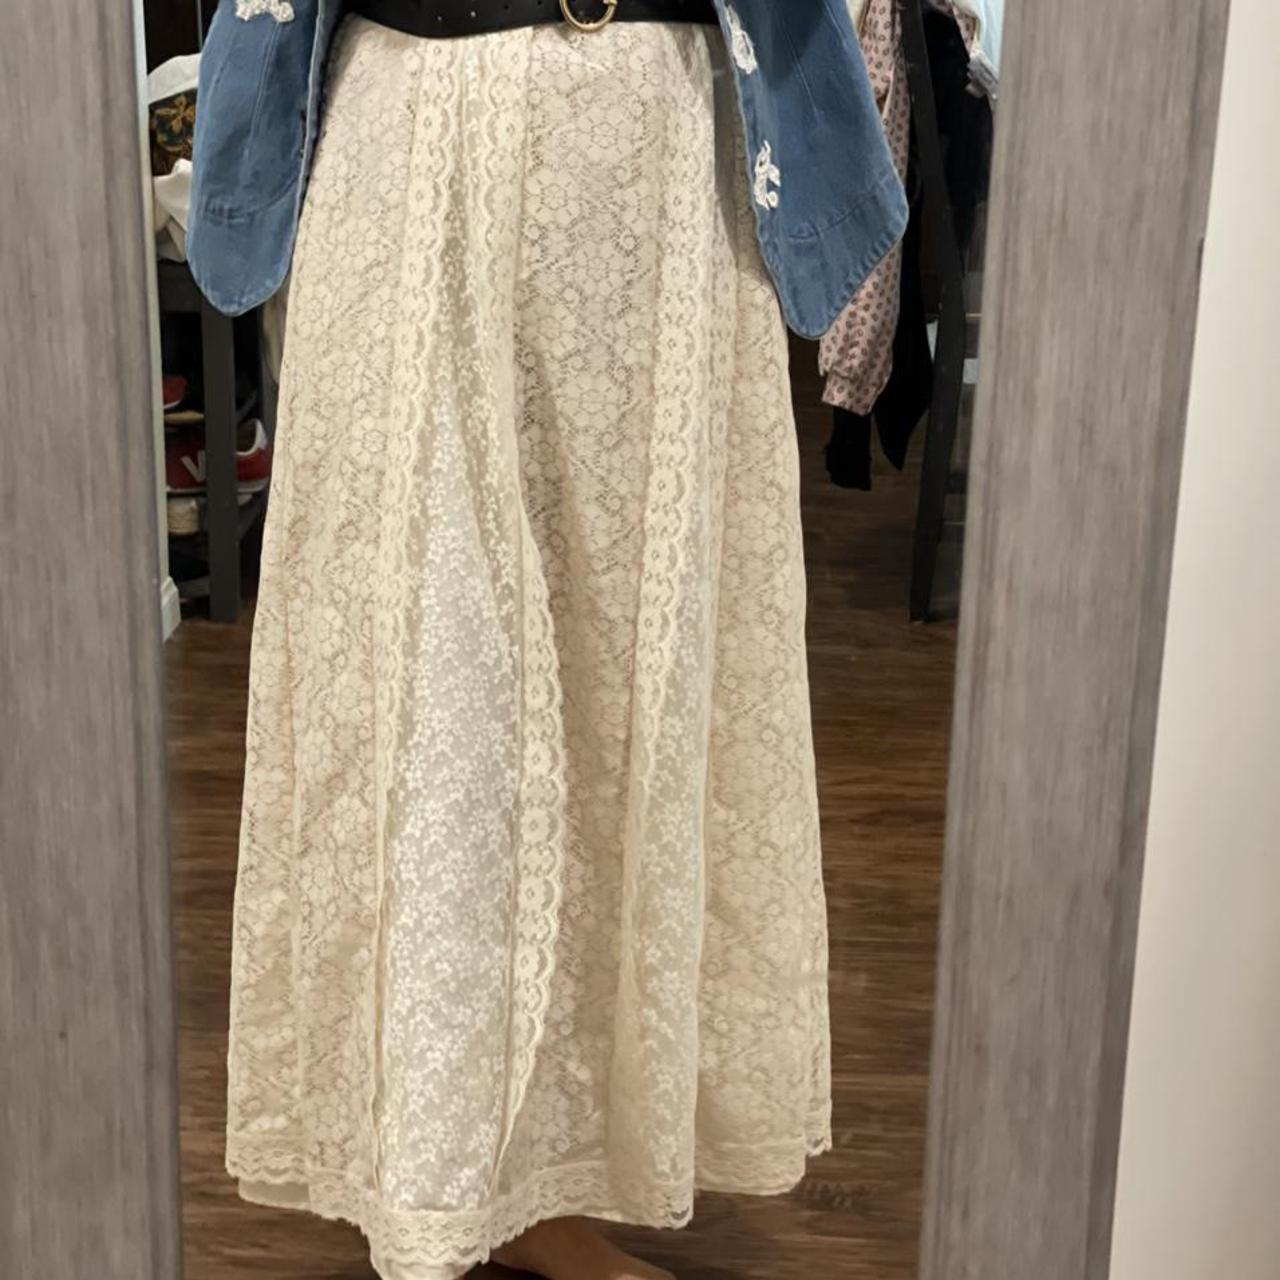 Product Image 3 - Lace maxi skirt ☁️🦋✨
Beautiful lace